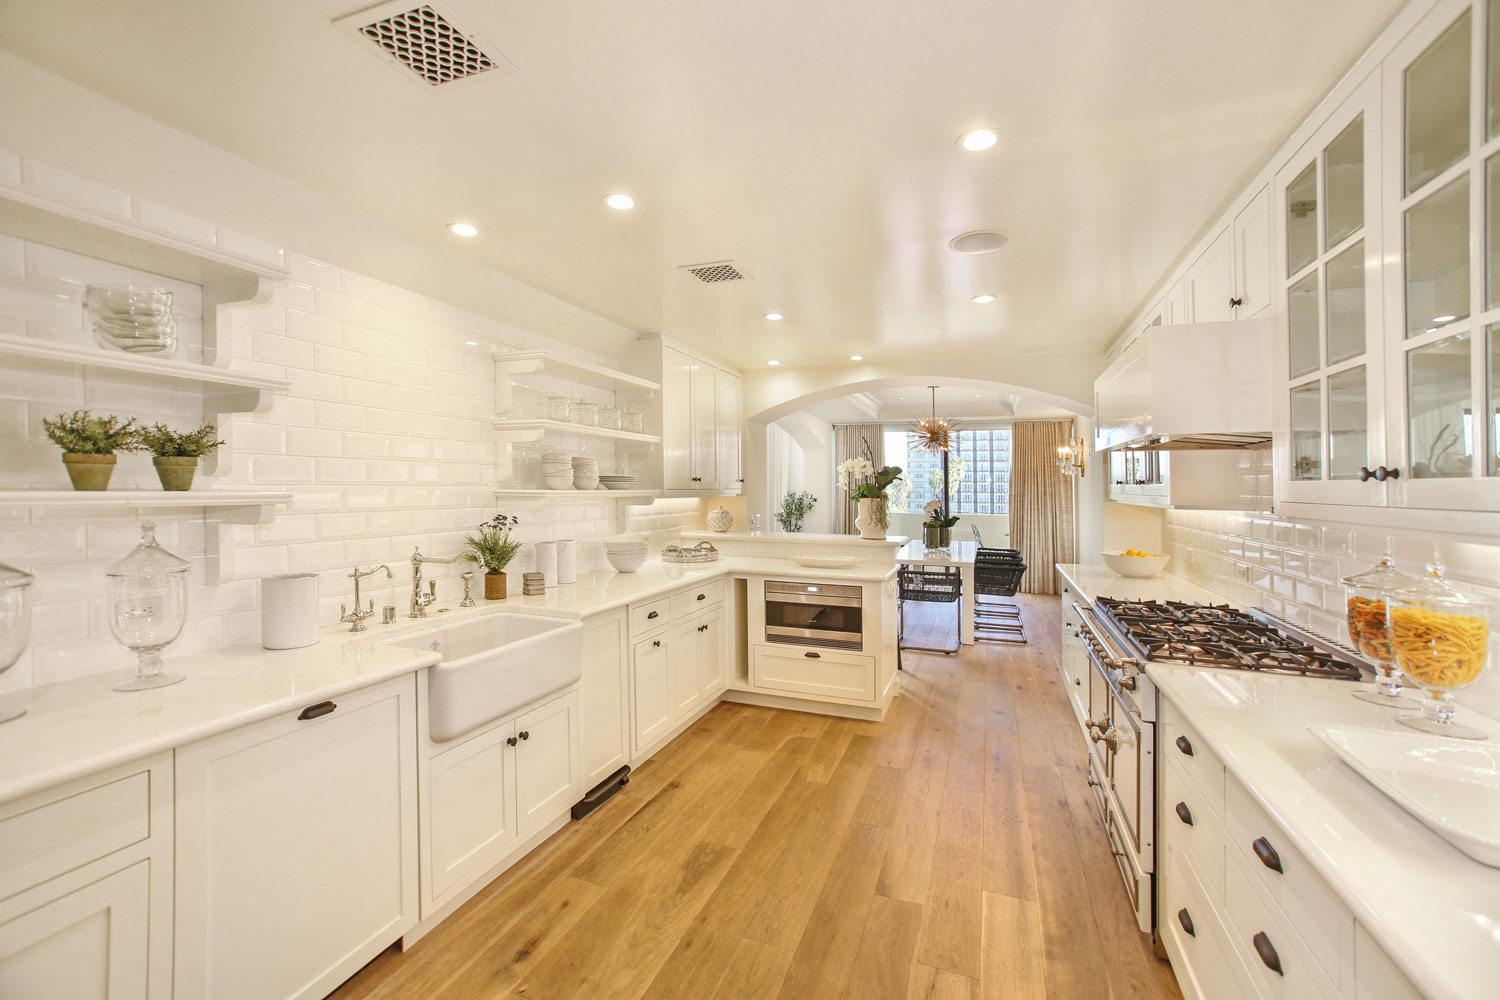 03-white-retro-kitchen-subway-tile-white-countertops-exposed-shelves-gary-drake-general-contractor.jpg